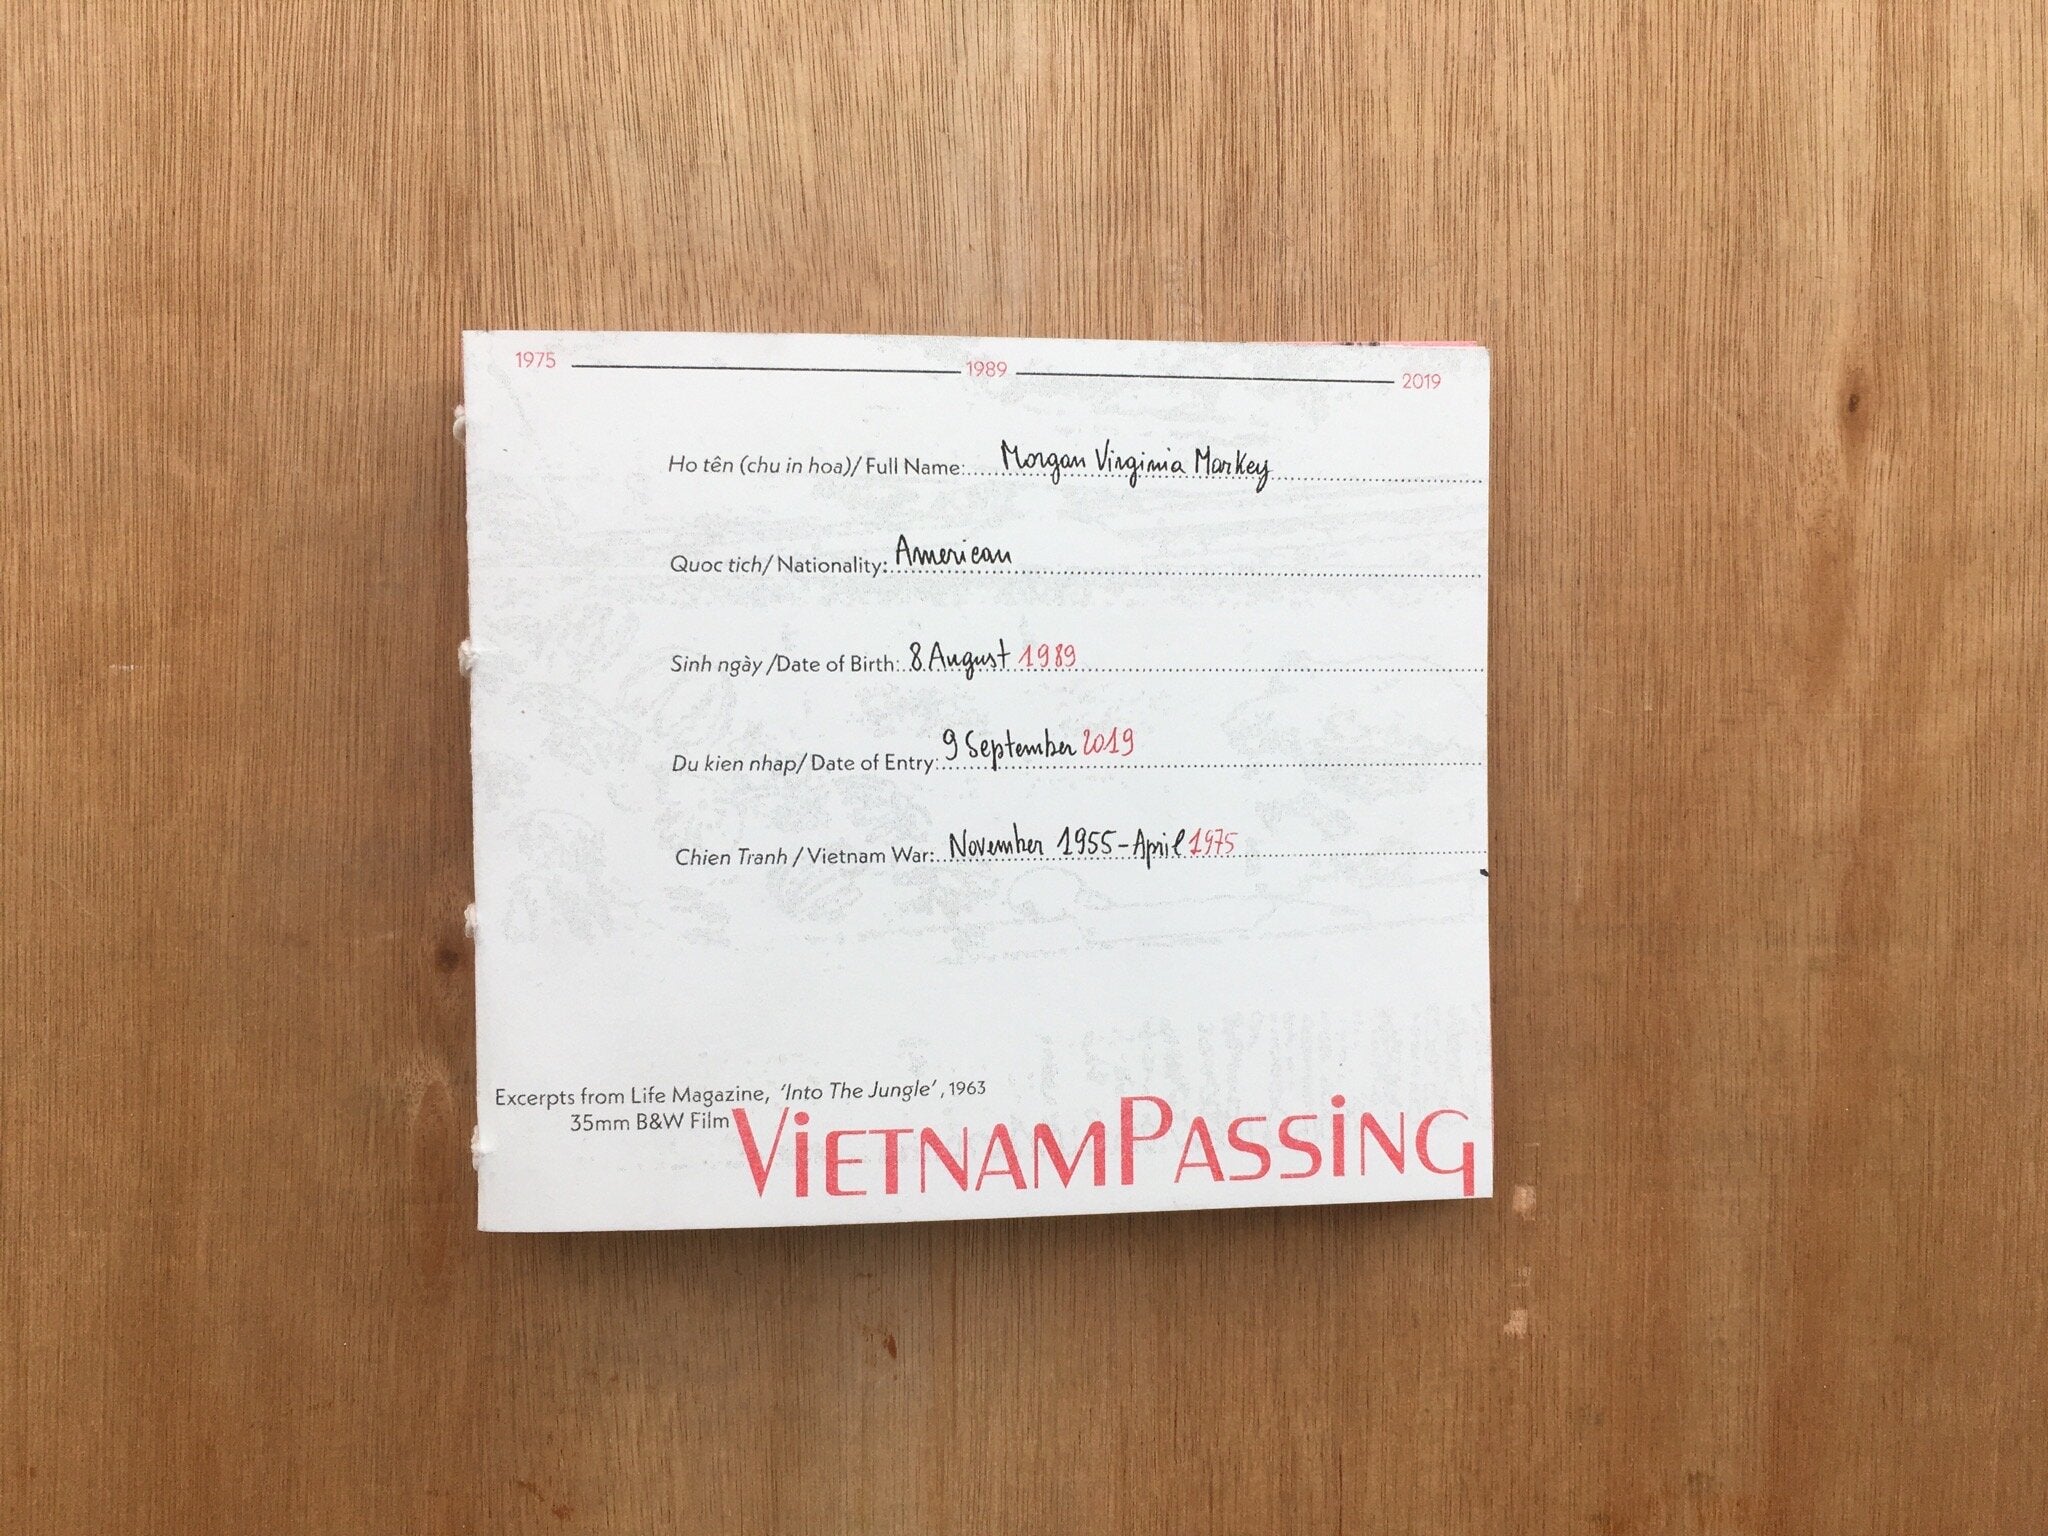 VIETNAM PASSING by Morgan Markey